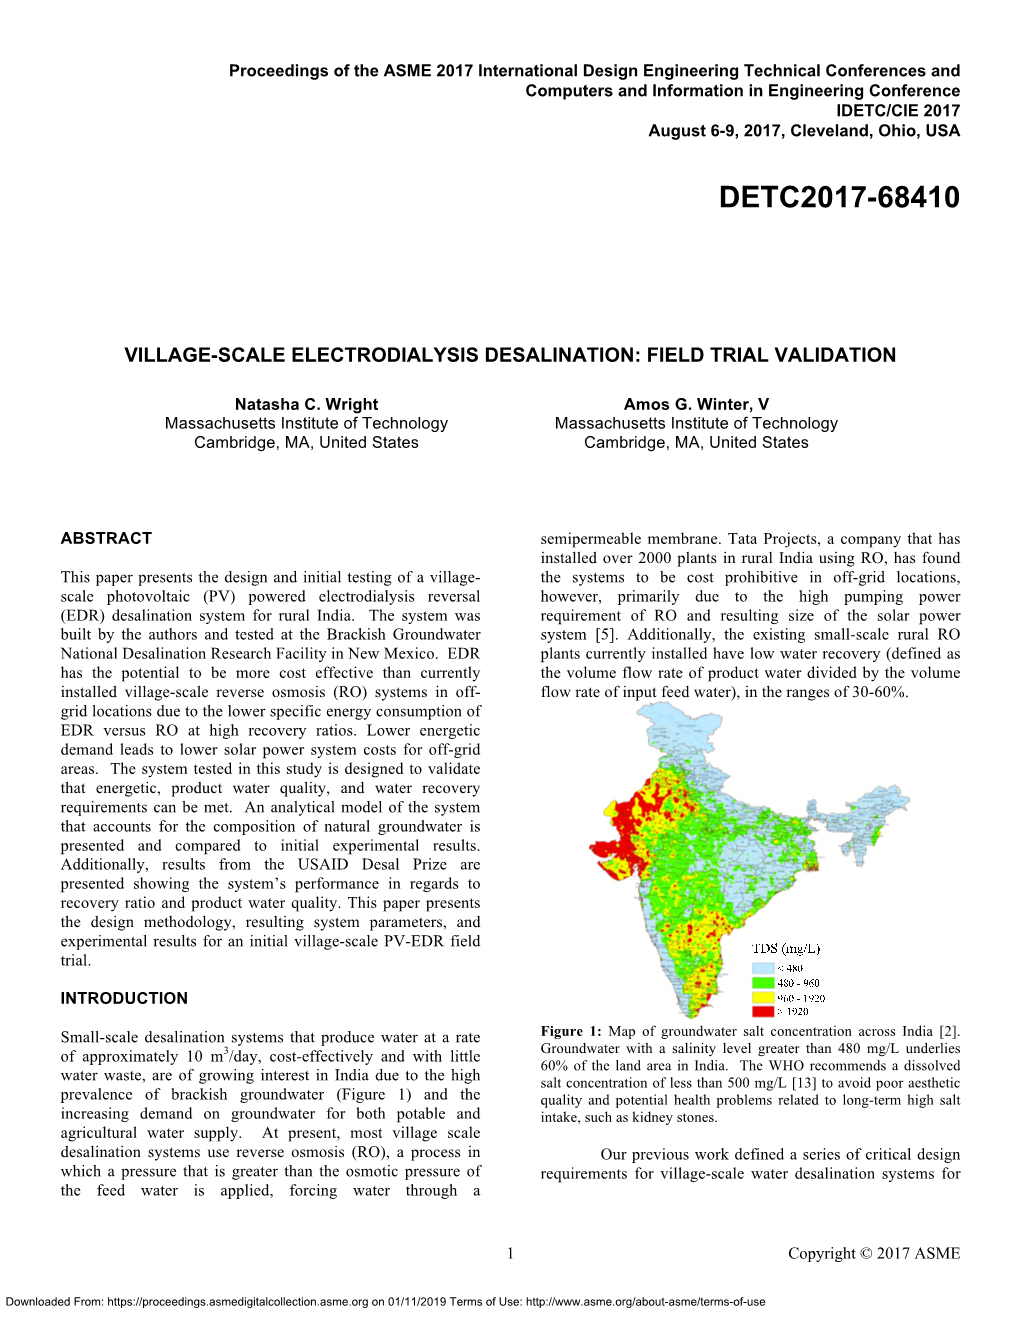 Village-Scale Electrodialysis Desalination: Field Trial Validation